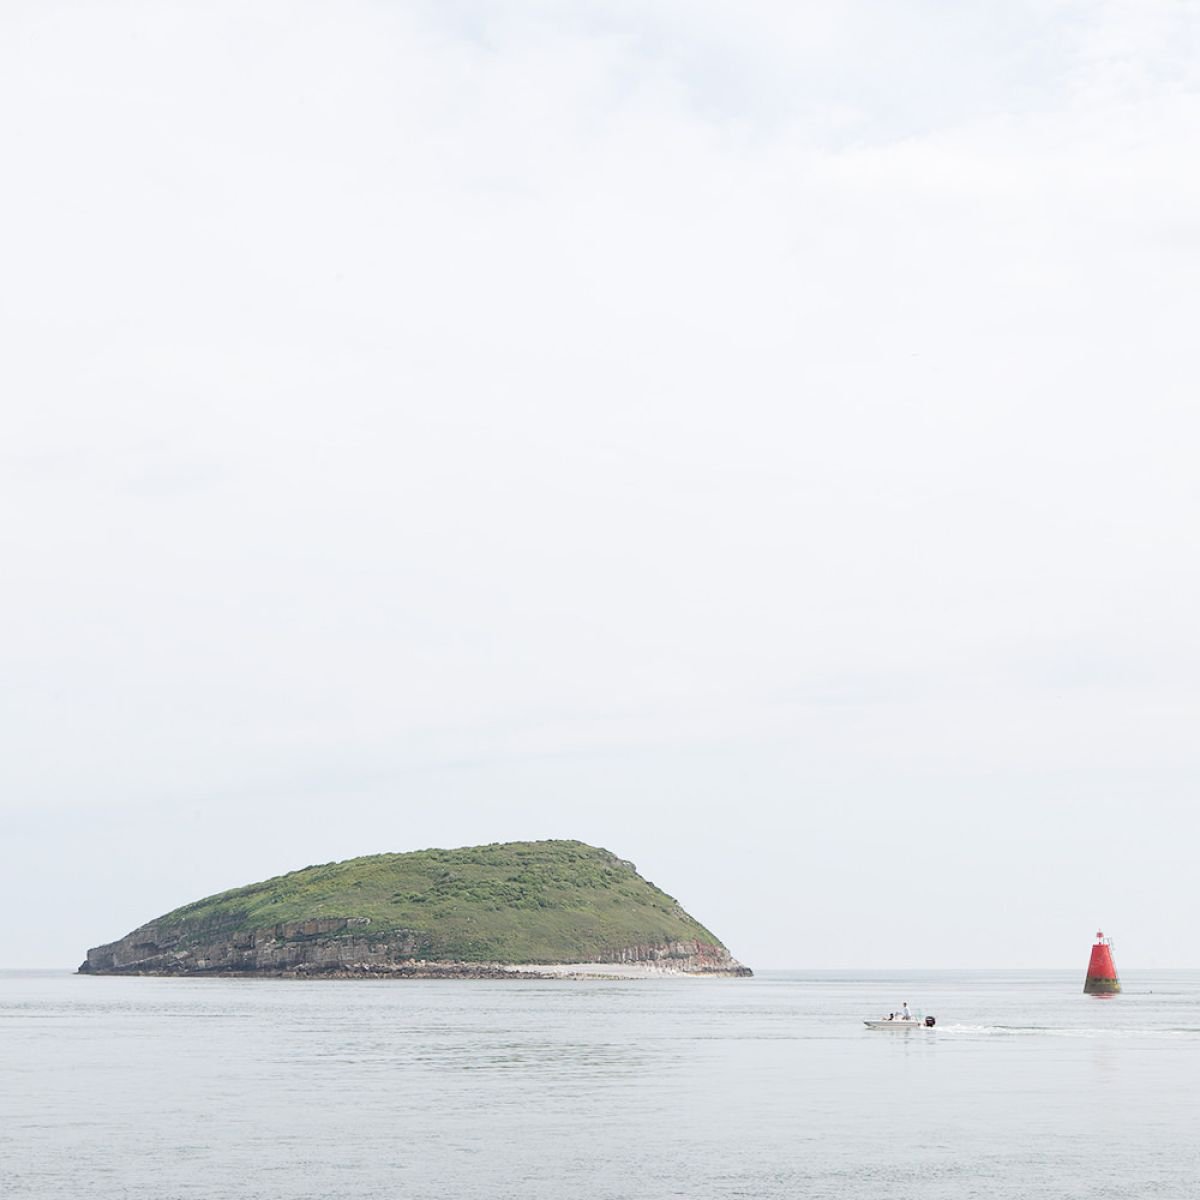 Island, Speedboat, Marker by Steve Deer